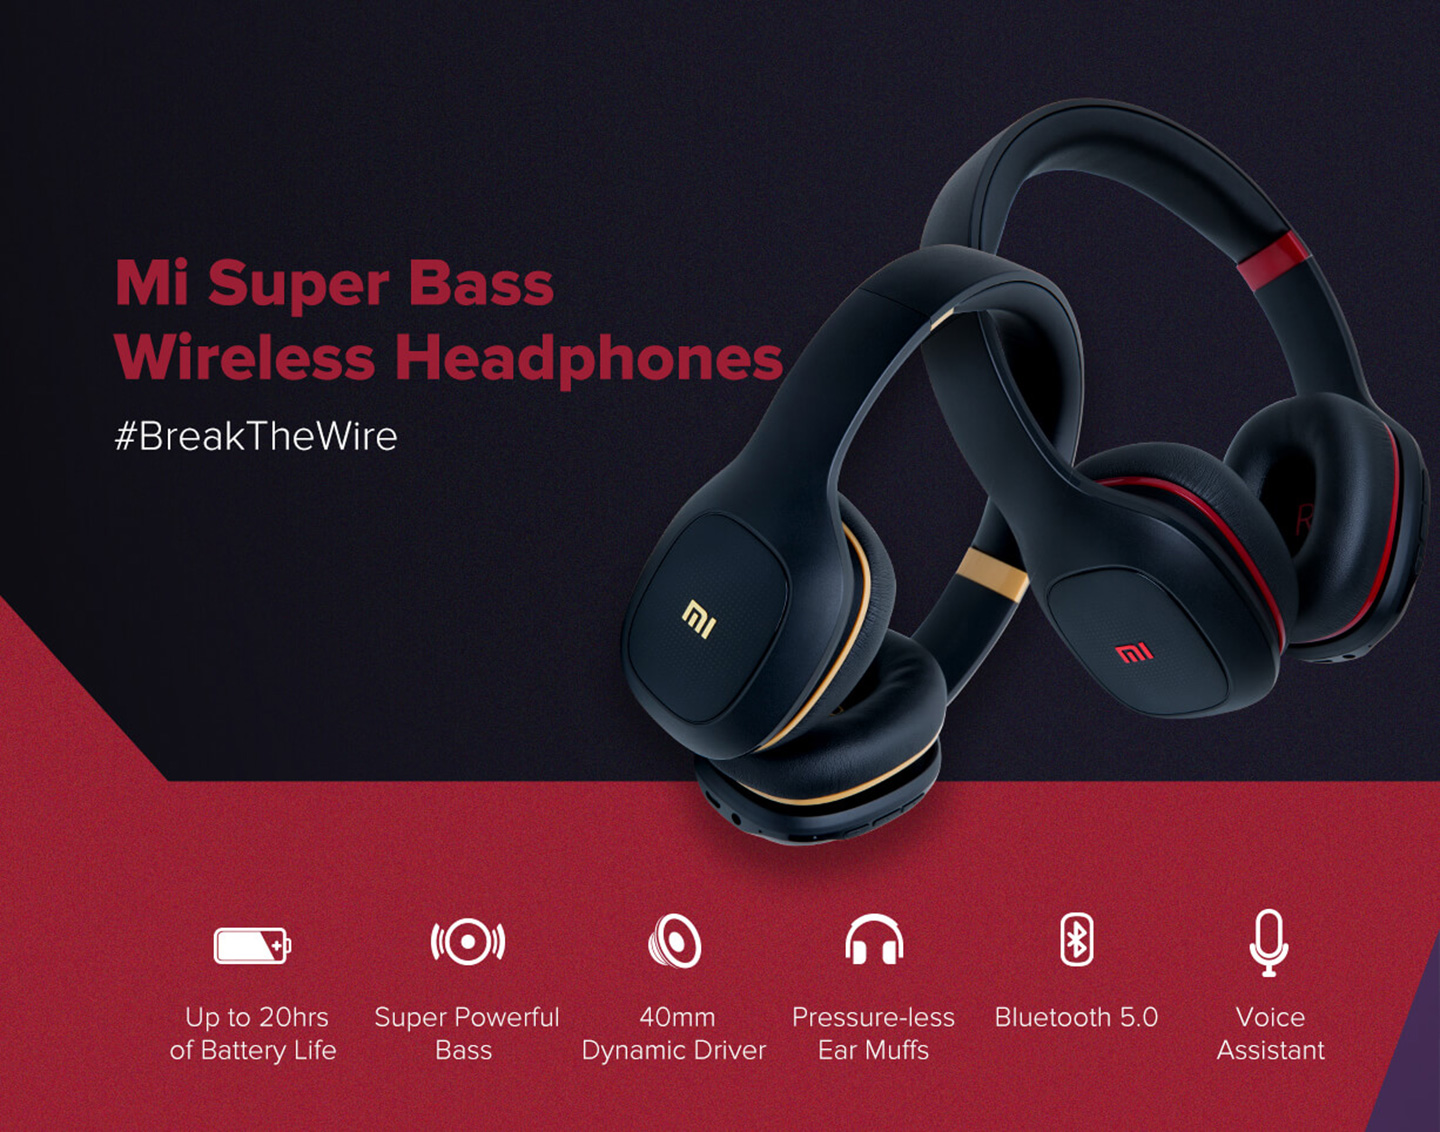 Mi Super Bass Wireless Headphones